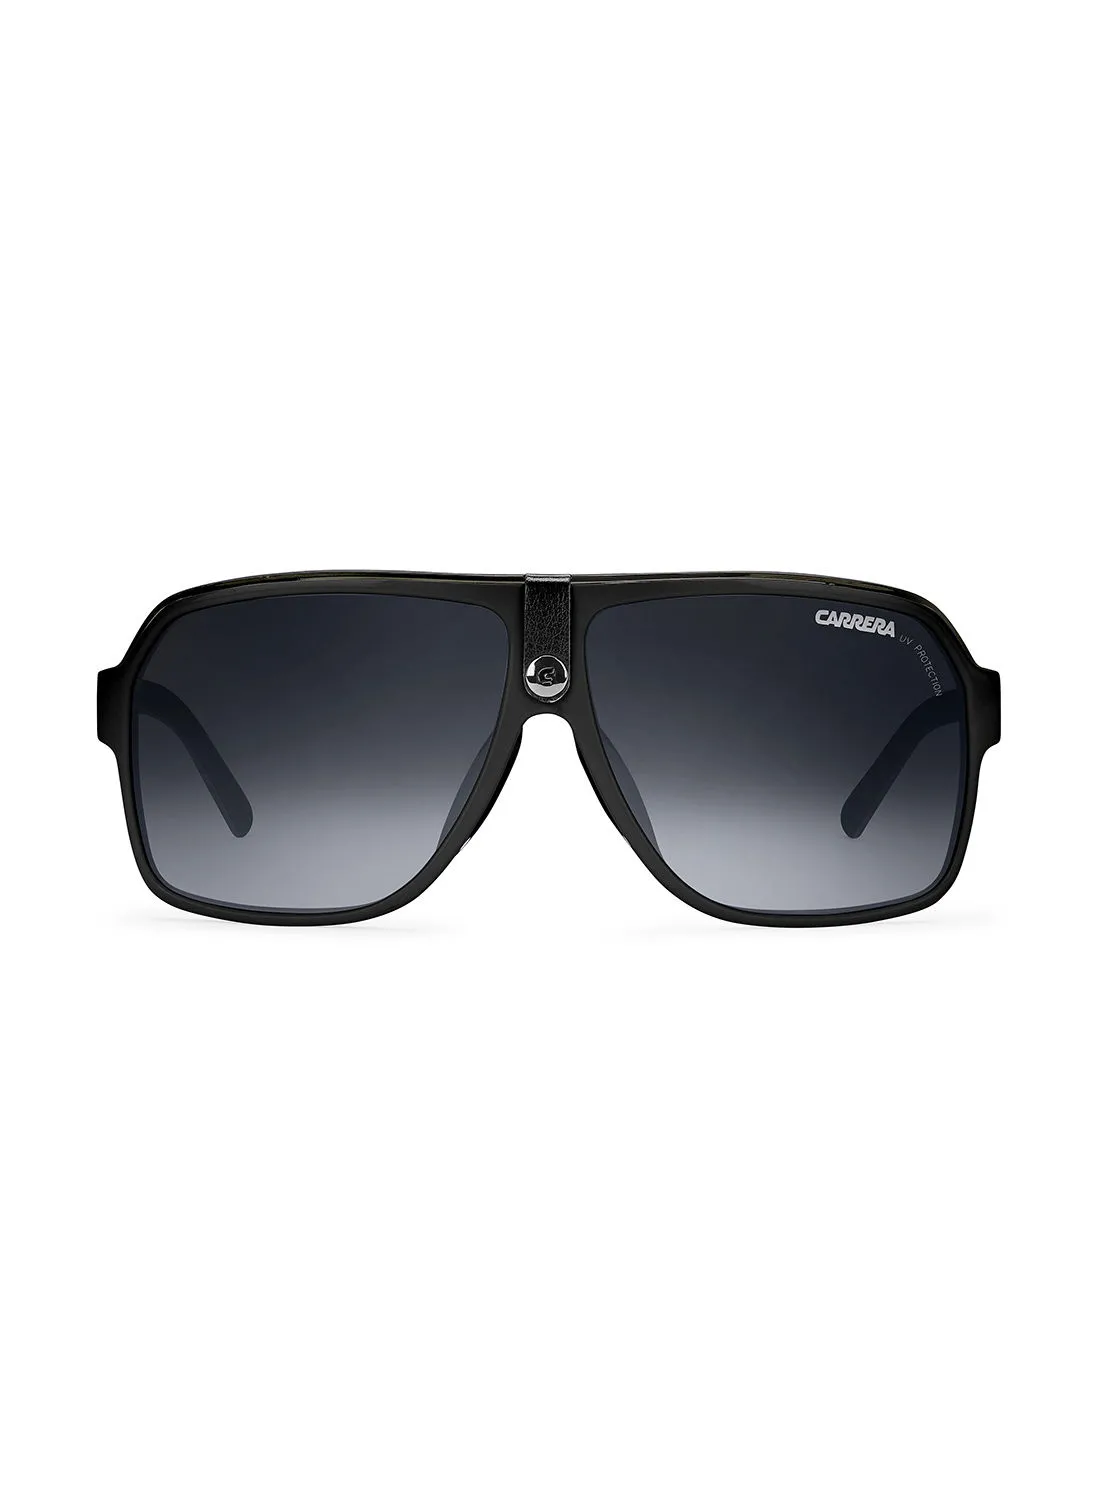 CARRERA Men's Rectangular Sunglasses 24031180762PT